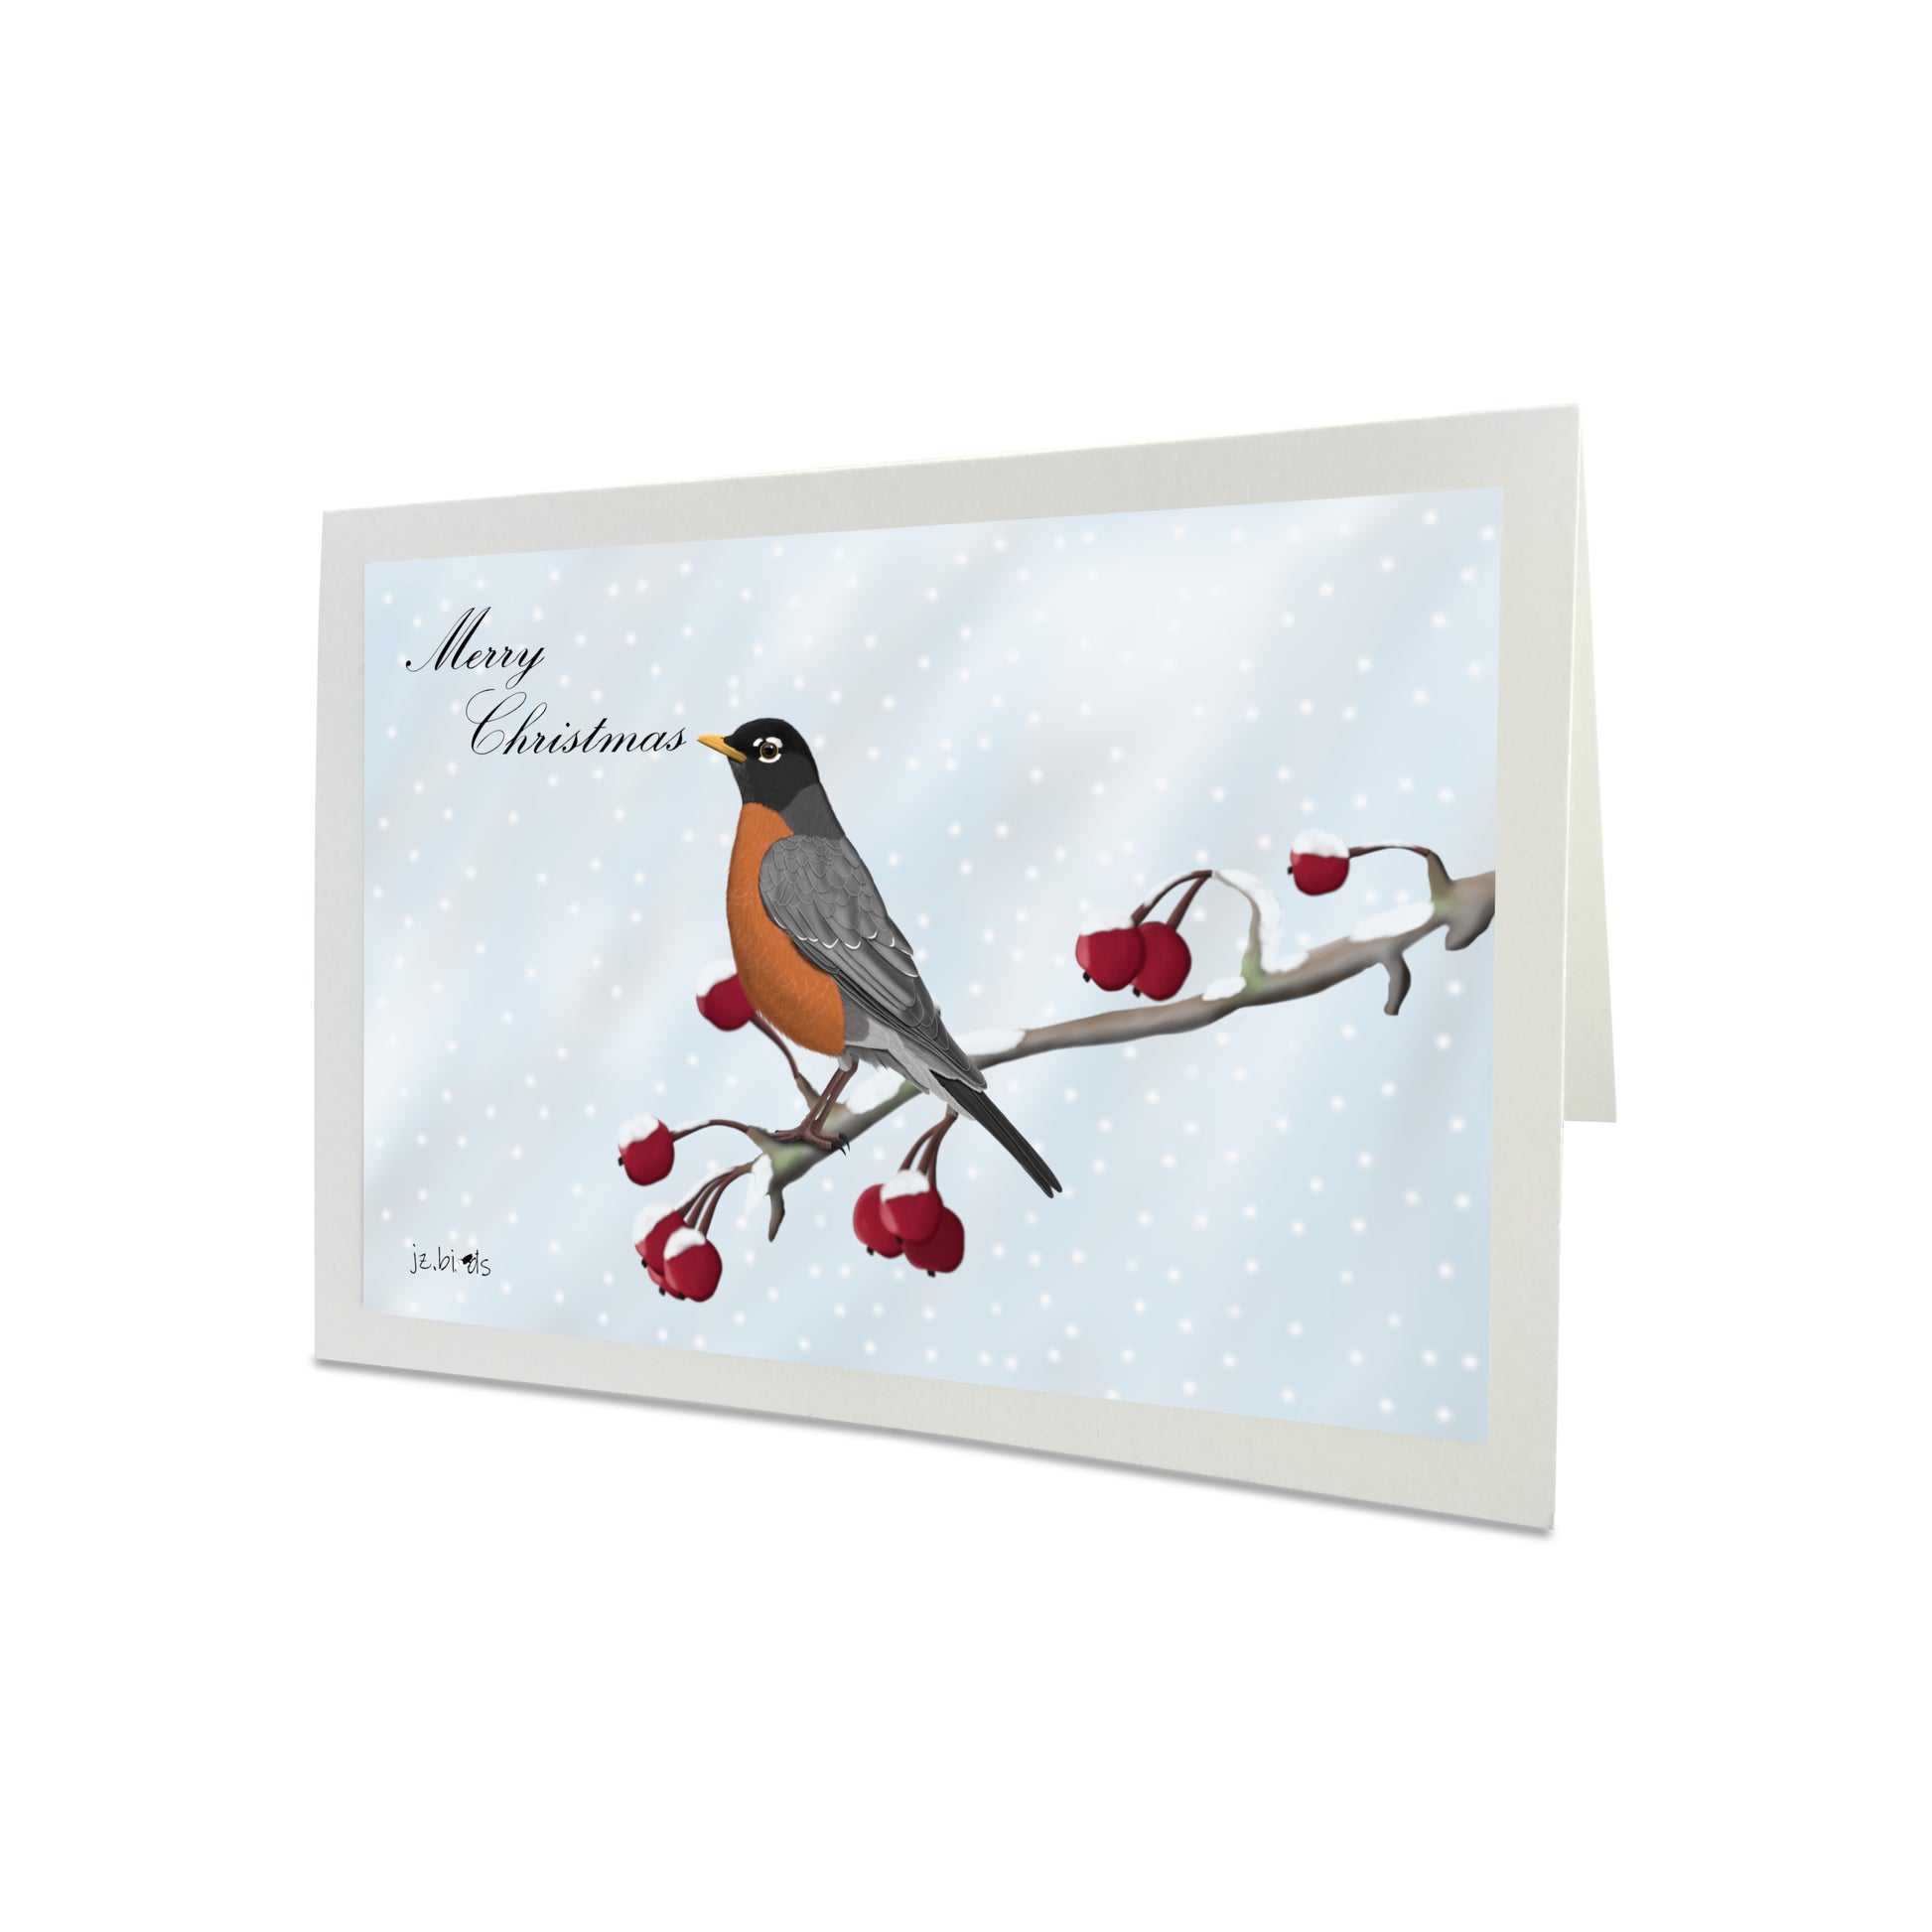 Robin Bird on a Winter Branch Merry Christmas Card